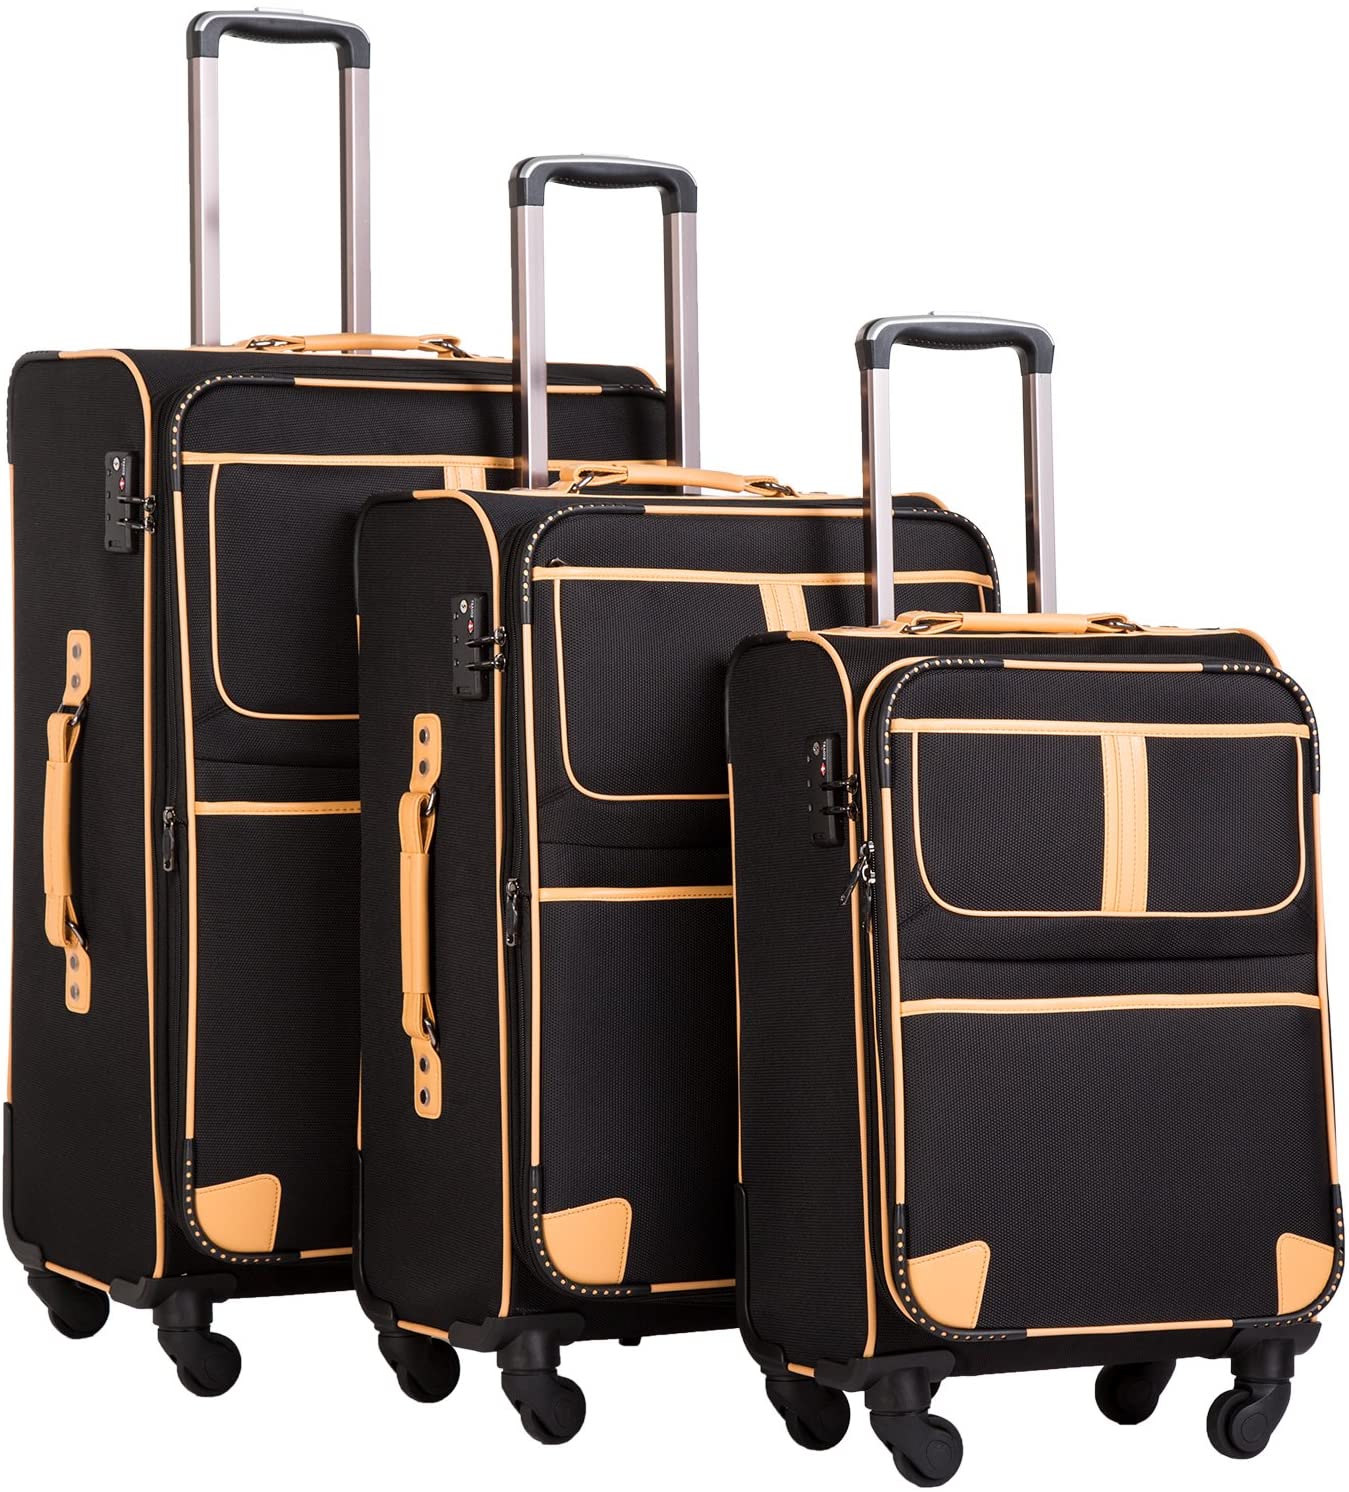 Coolife Expandable TSA Lock Soft Shell Suitcase Set, 3-Piece